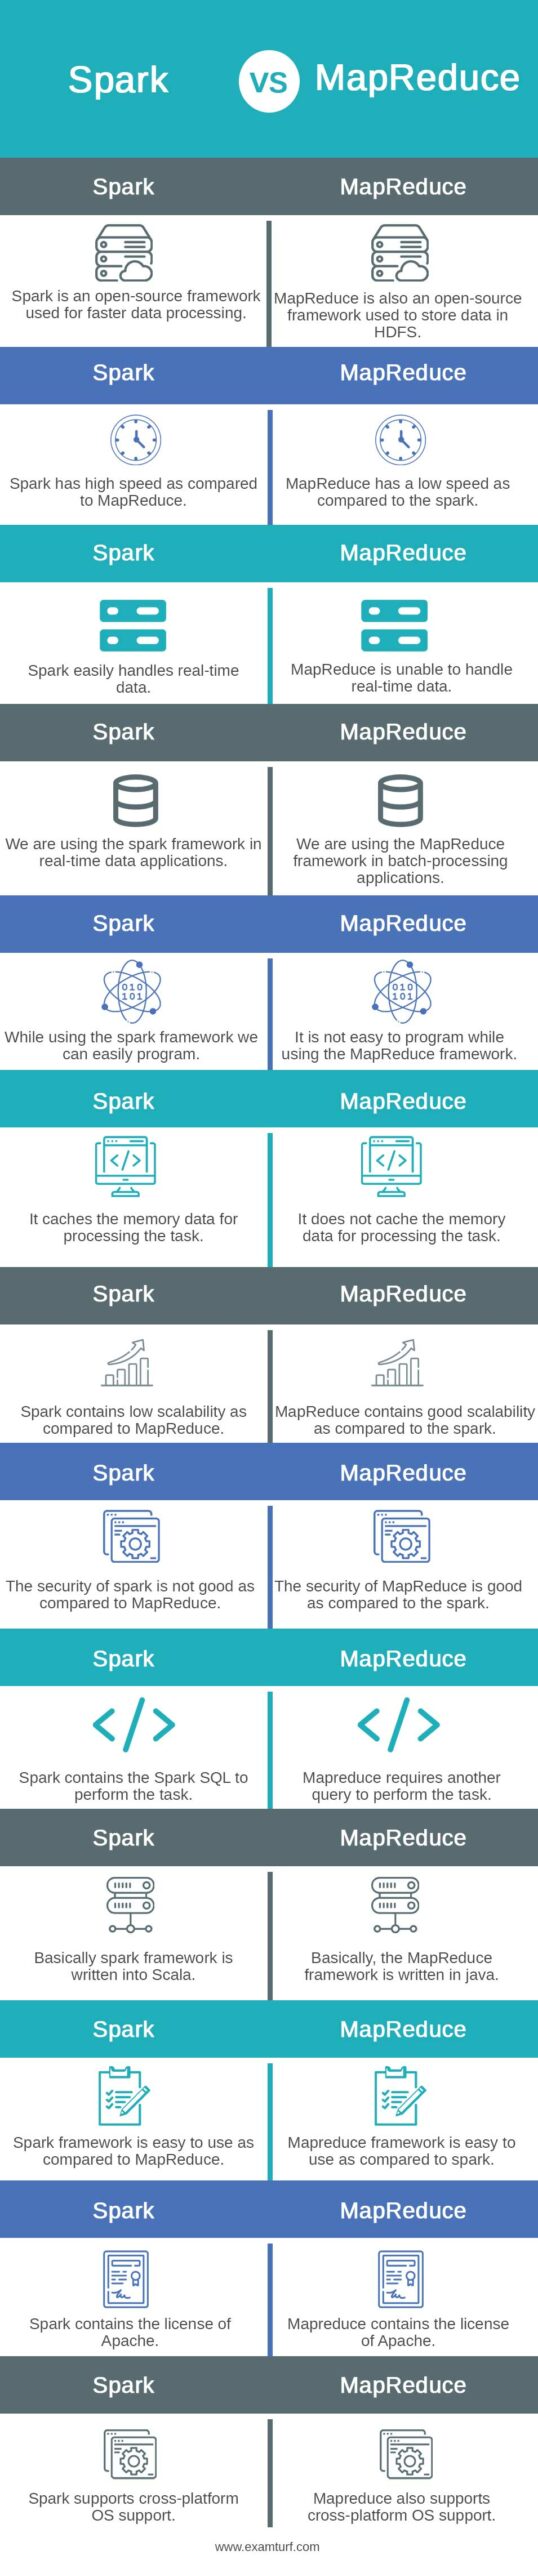 Spark-vs-MapReduce-info